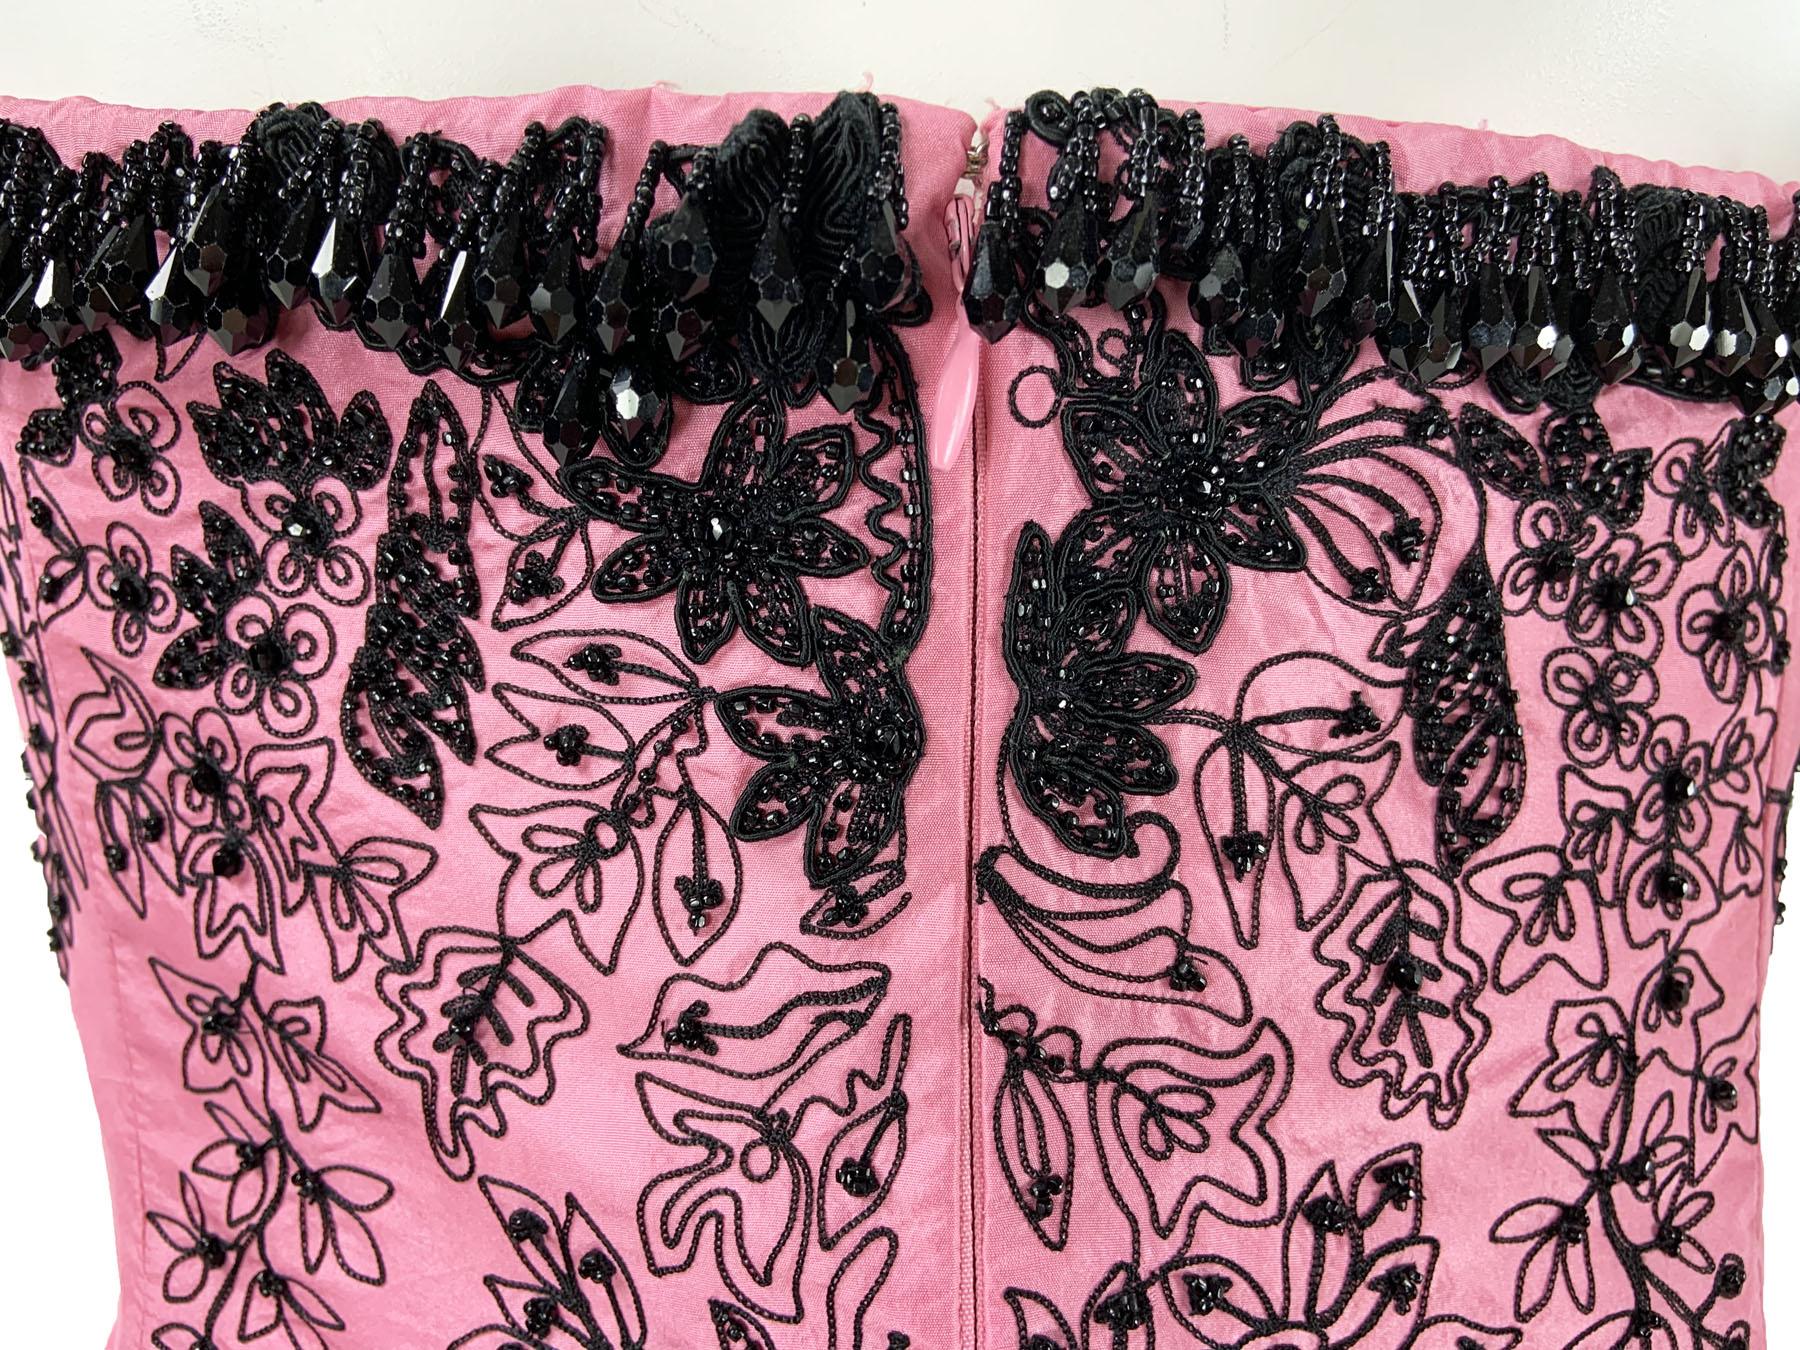 Oscar de la Renta S/S 2004 Collection Pink Silk Taffeta Embellished Dress Gown 8 For Sale 8